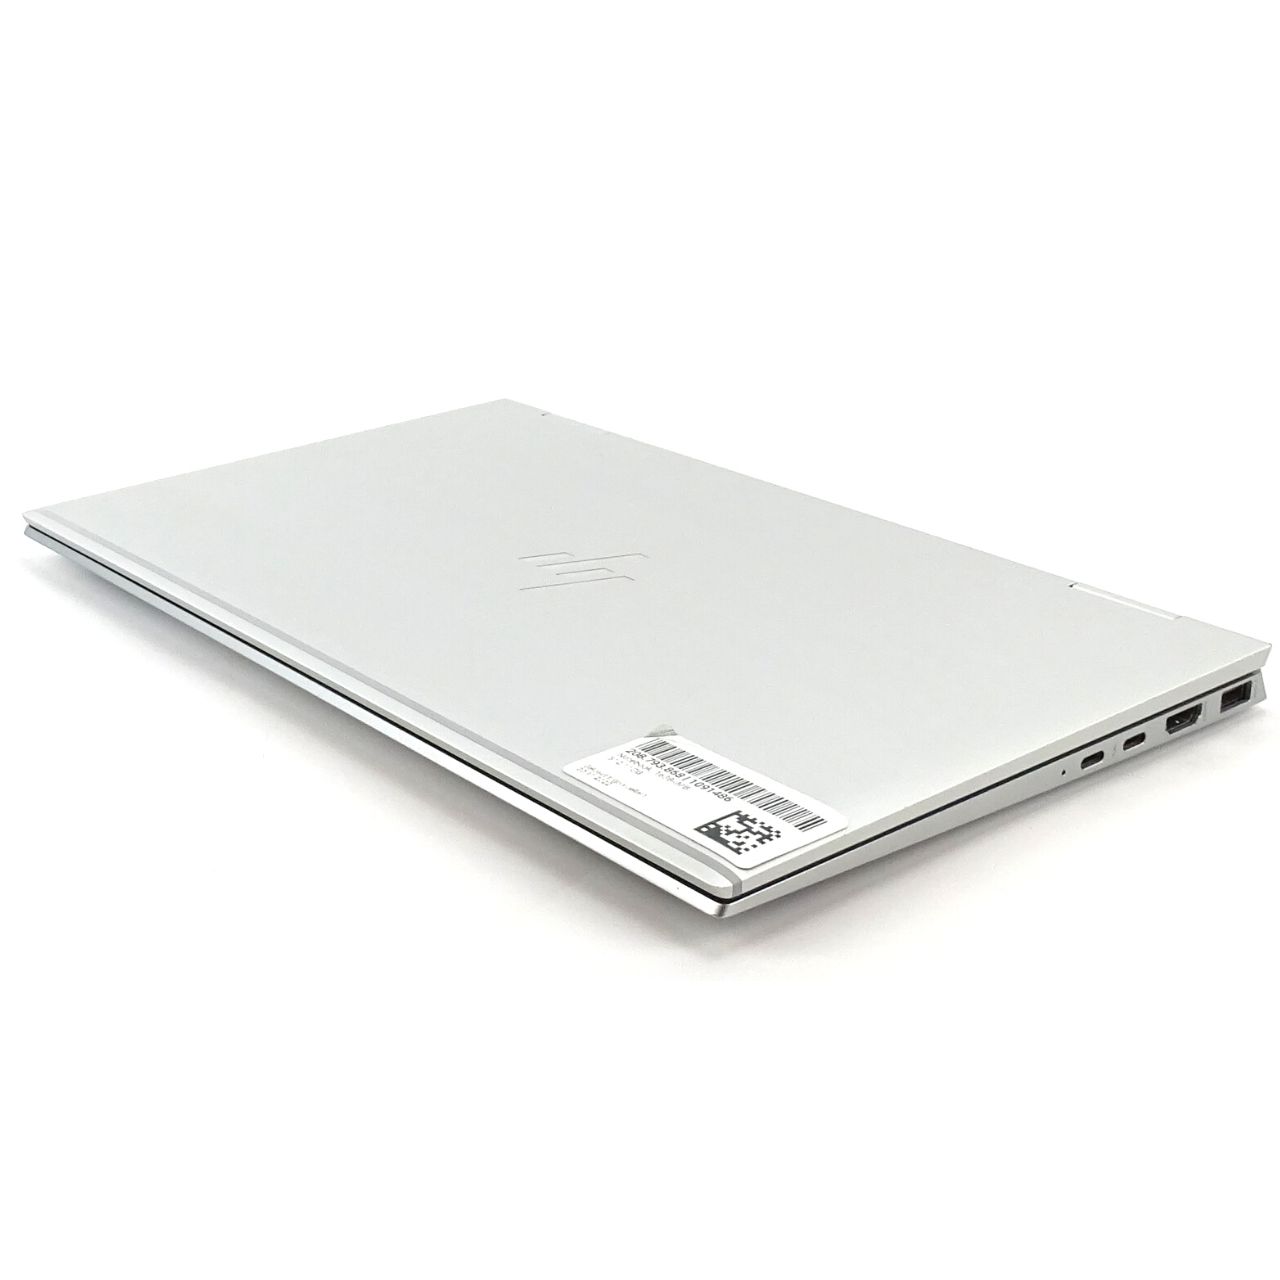 HP EliteBook X360 1030 G7 

 - 13,3 Zoll - Intel Core i7 10710U @ 1,1 GHz - 16 GB - 512 GB SSD - 1920 x 1080 FHD - Touchscreen - Windows 10 Professional - Sehr gut